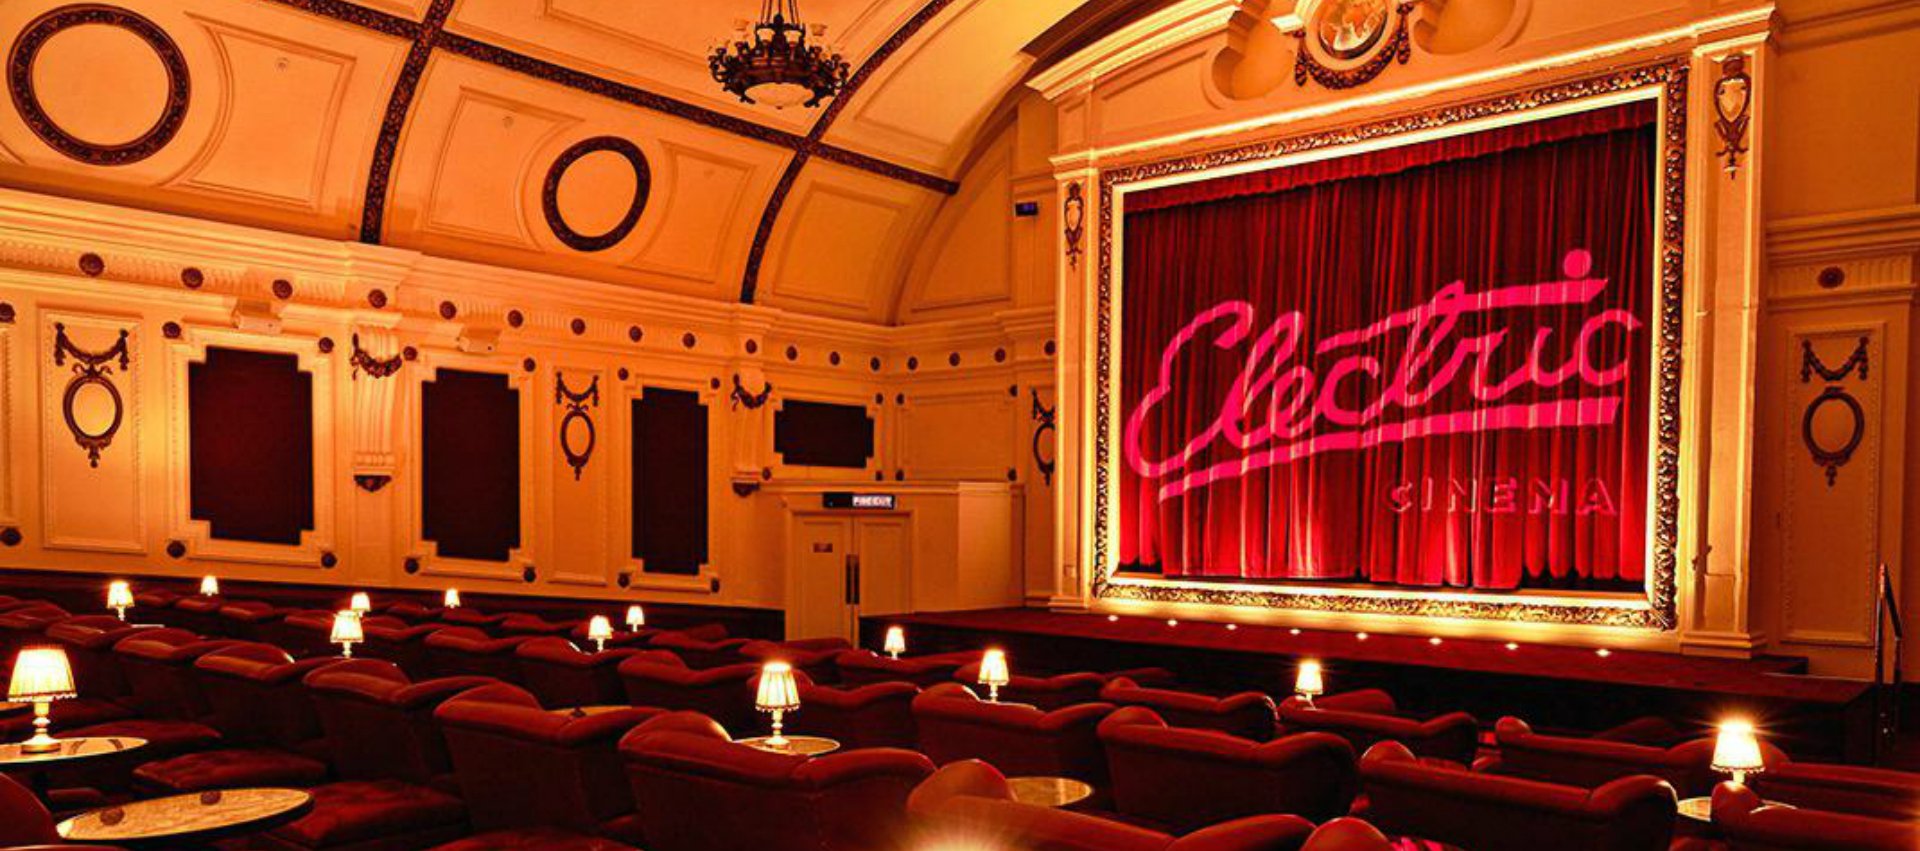 10 Best Cinemas in London London Top Sights Tours